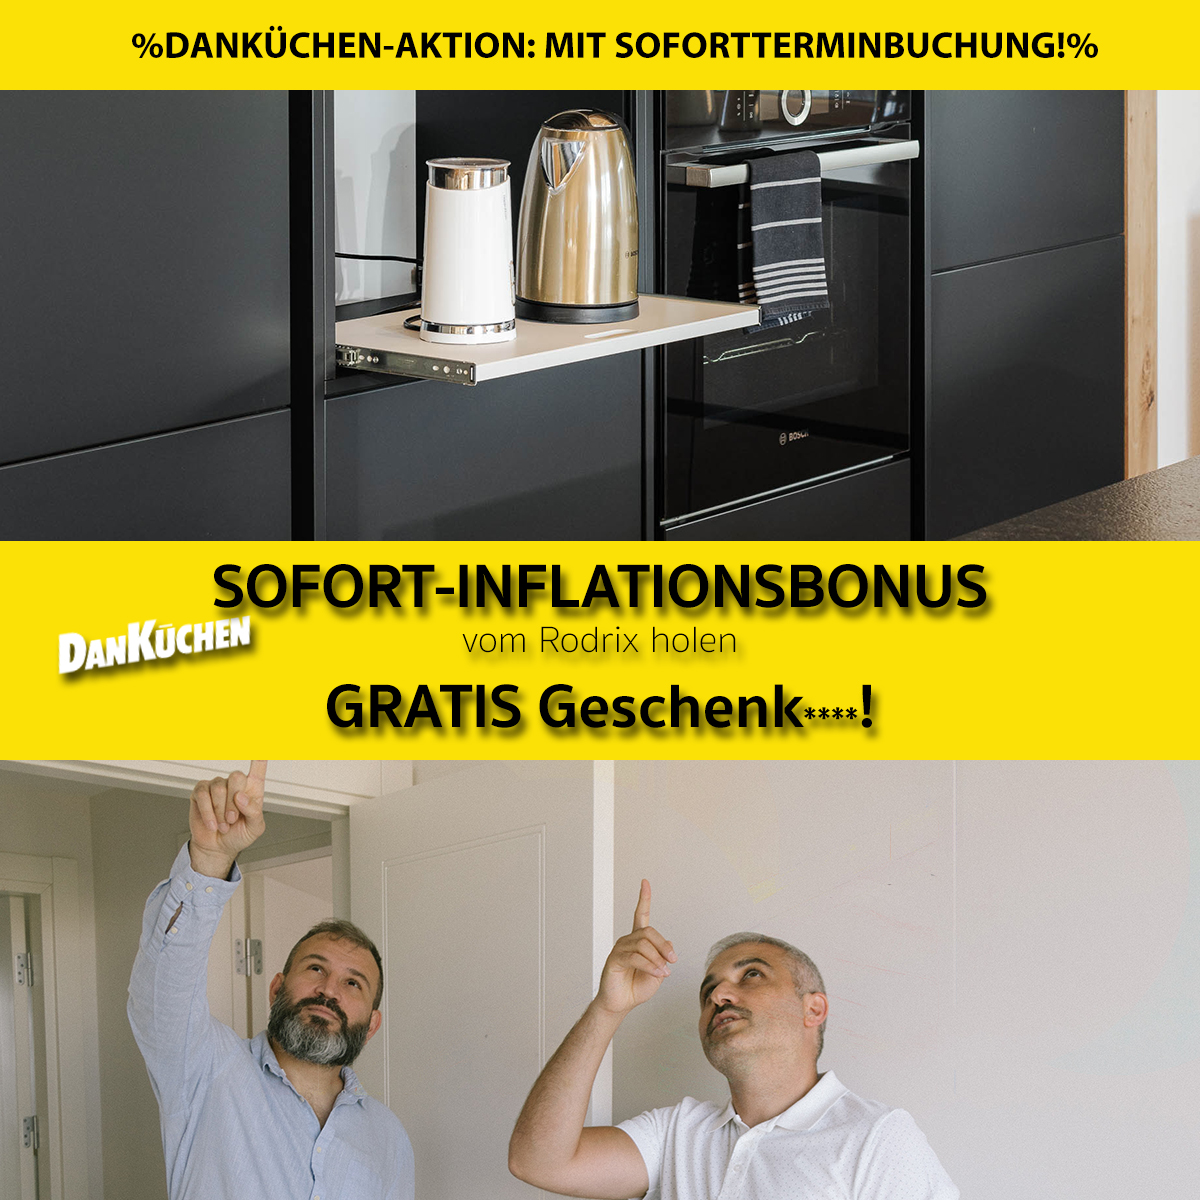 rodrix-dan-kuechen-fb-kampagne-soforttermin-inflation-bonus4